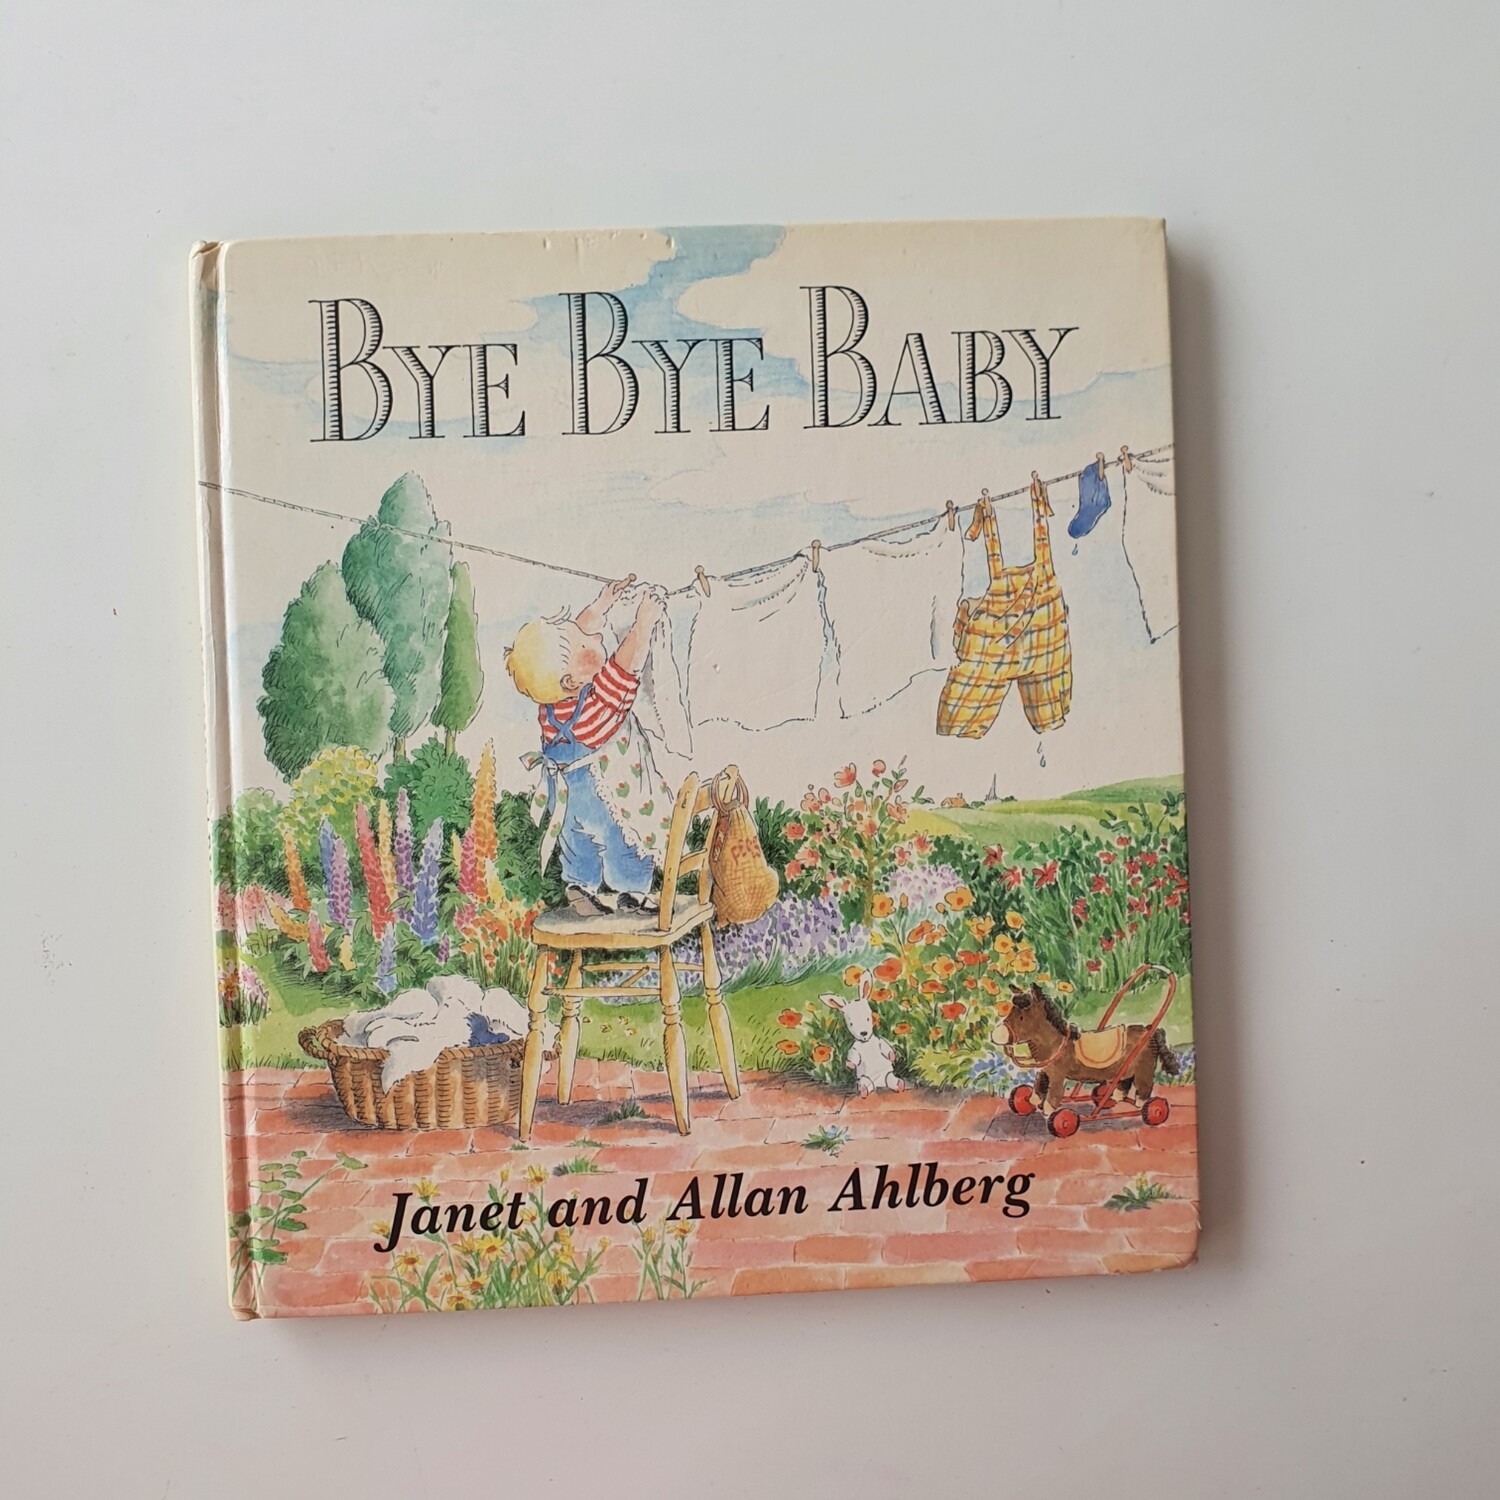 Bye Bye Baby - washing line - Janet and Allan Ahlberg 1989